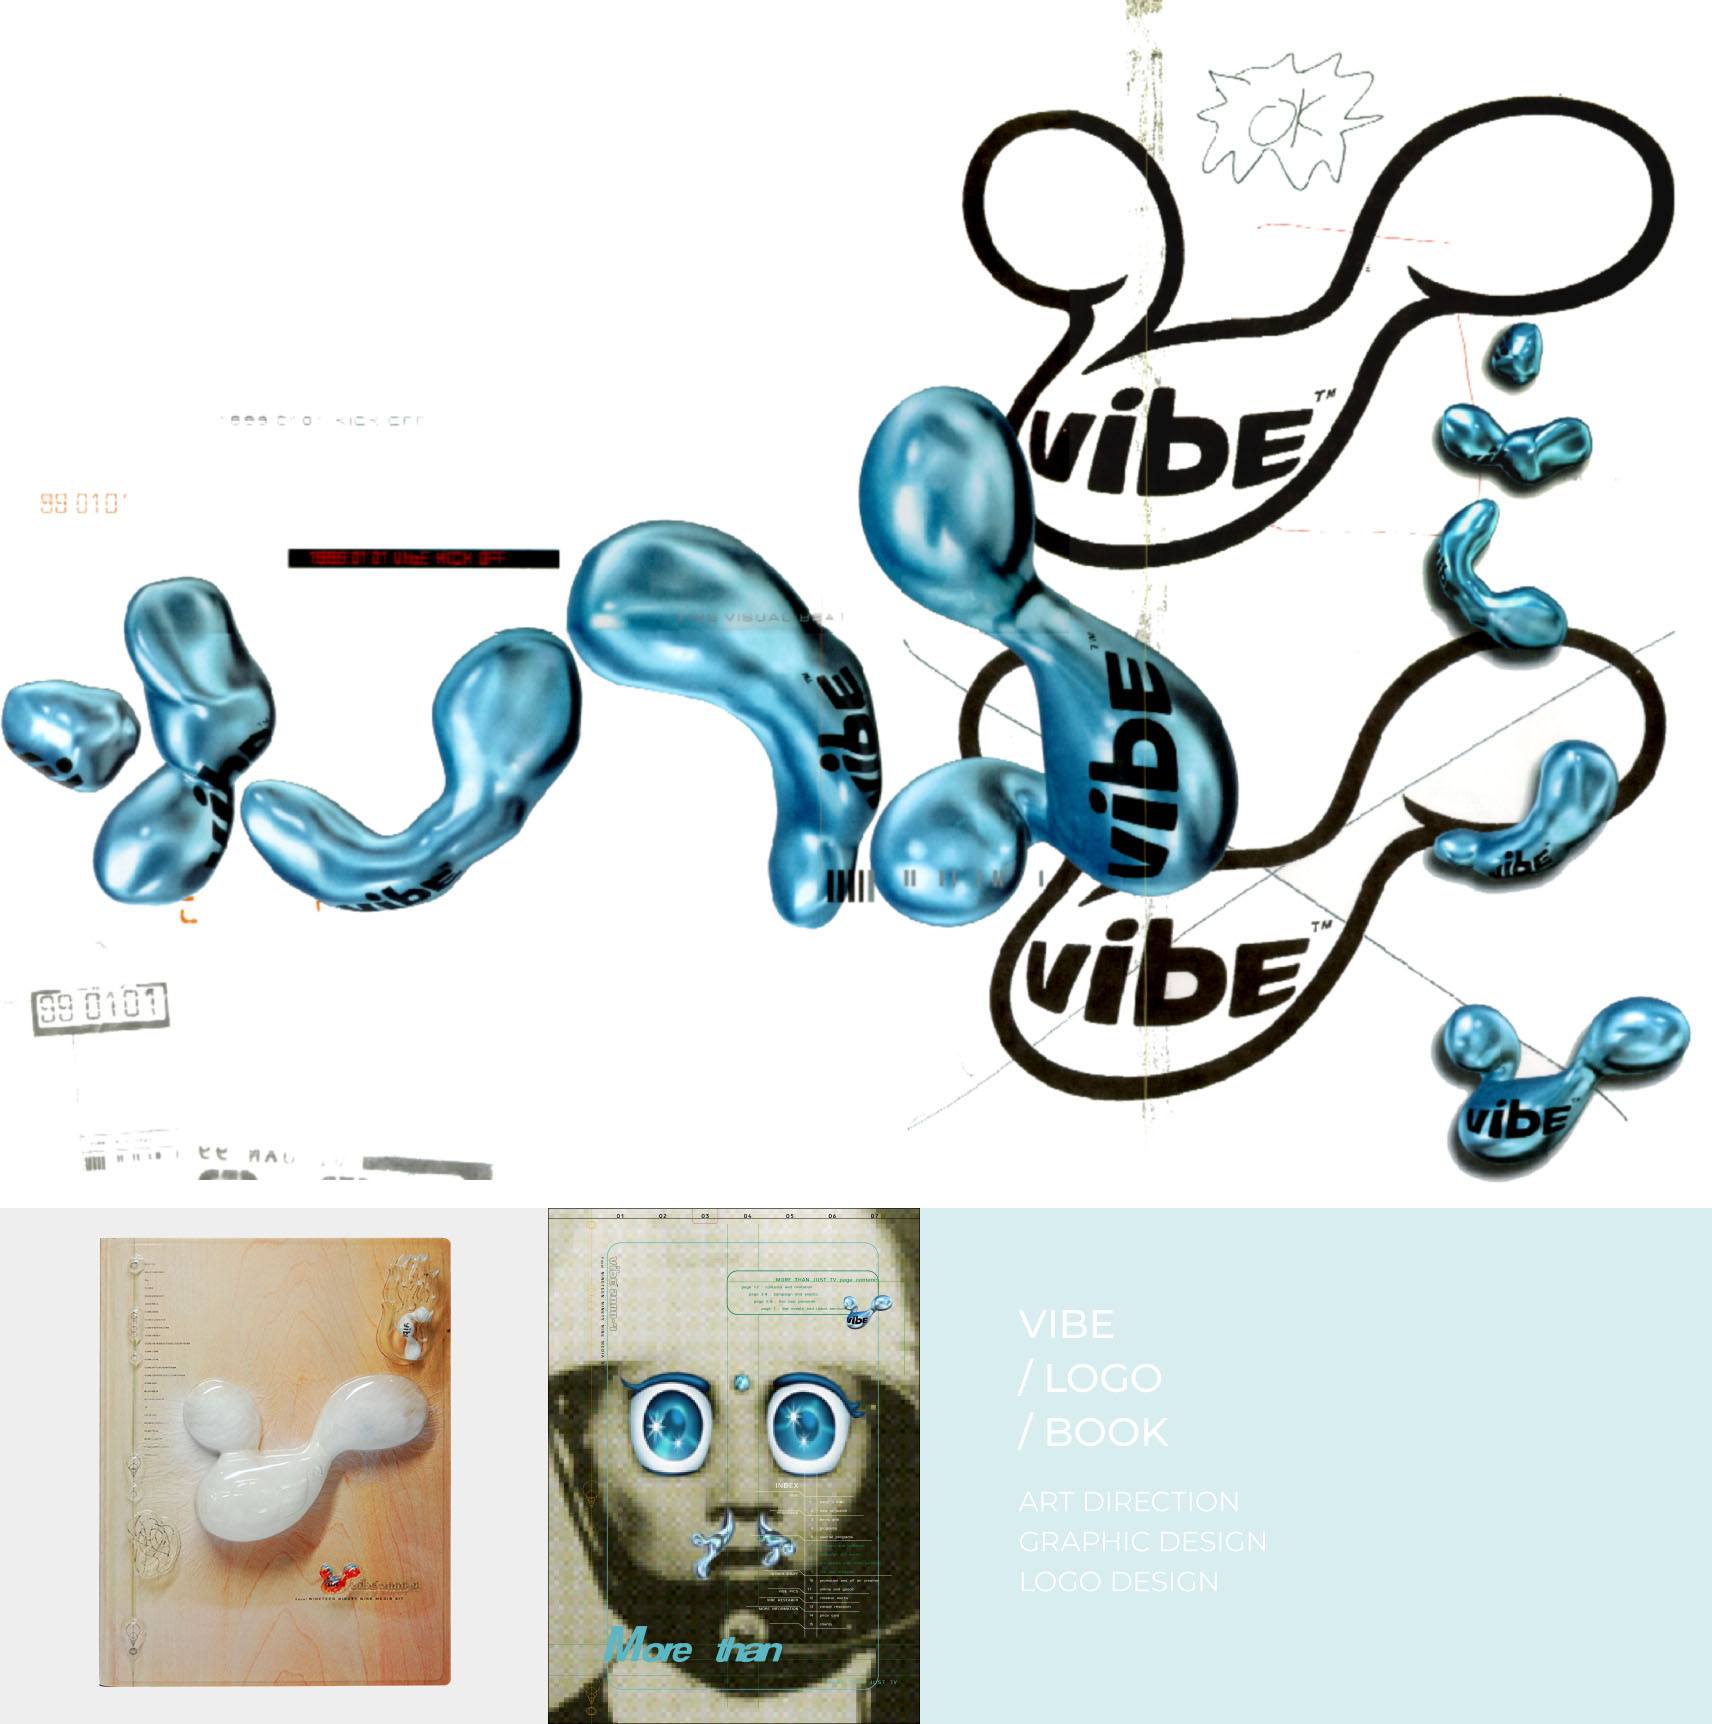 VIBE / LOGO / BOOK - ART DIRECTION GRAPHIC DESIGN LOGO DESIGN